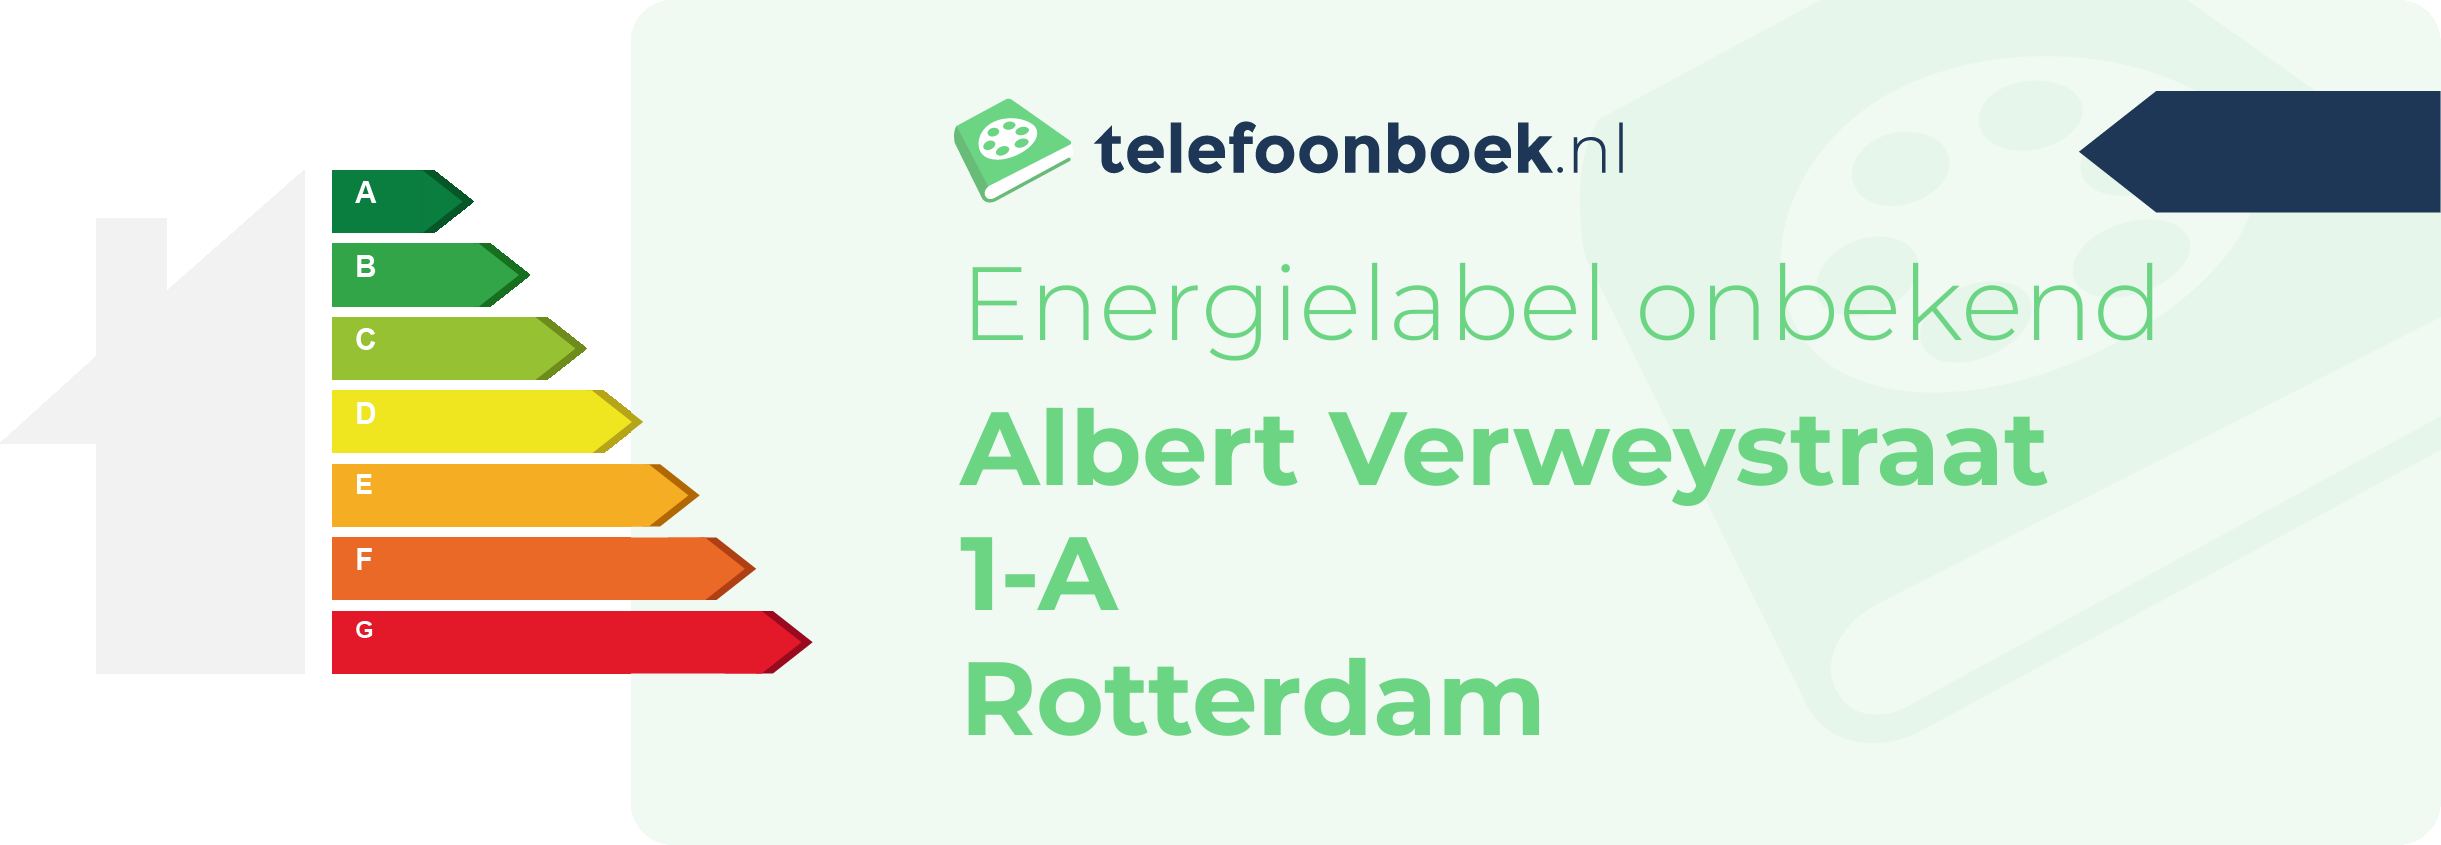 Energielabel Albert Verweystraat 1-A Rotterdam